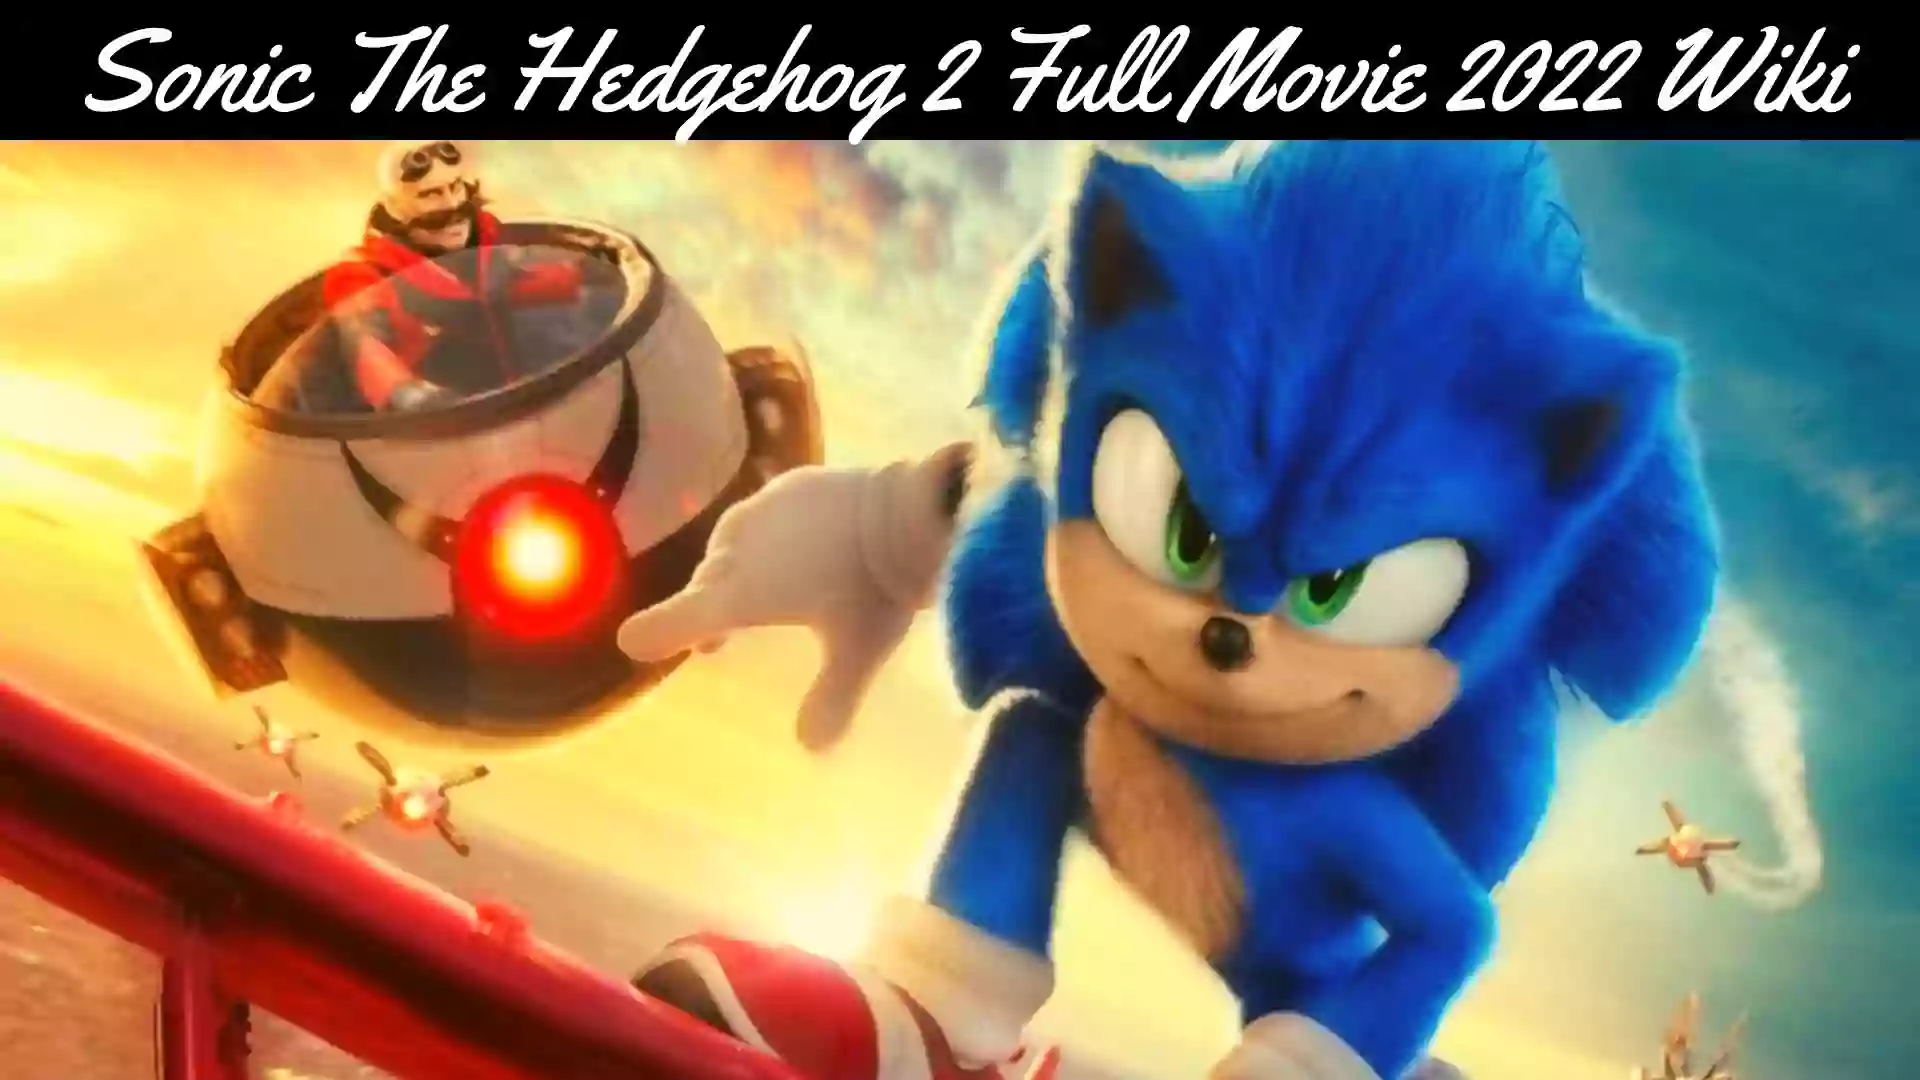 Sonic The Hedgehog 2 Full Movie 2022 Wiki